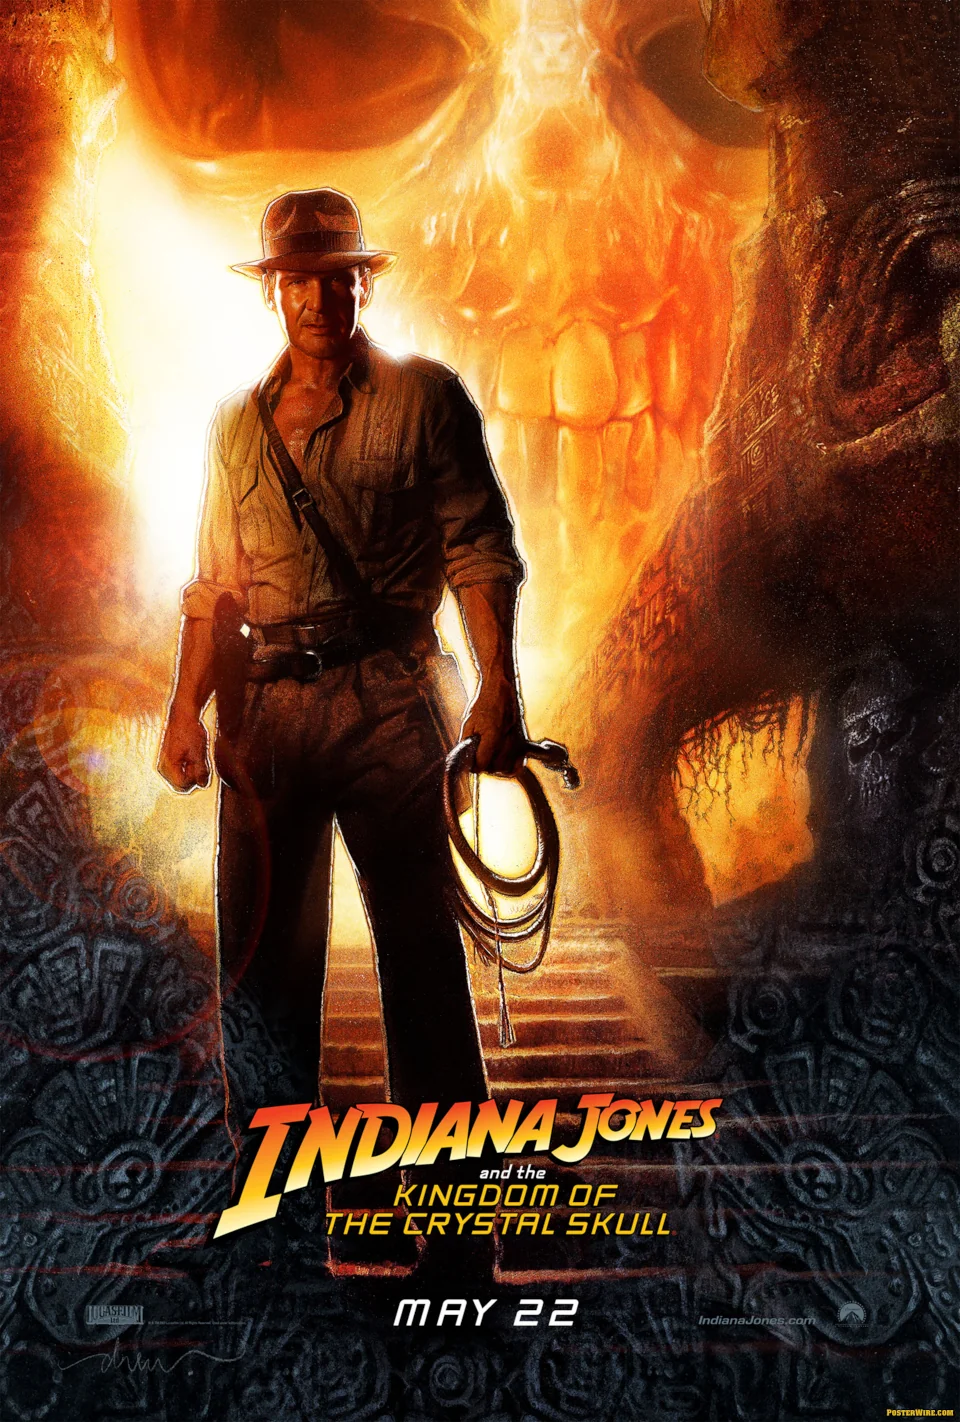 Indiana Jones and the Kingdom of the Crystall Skull